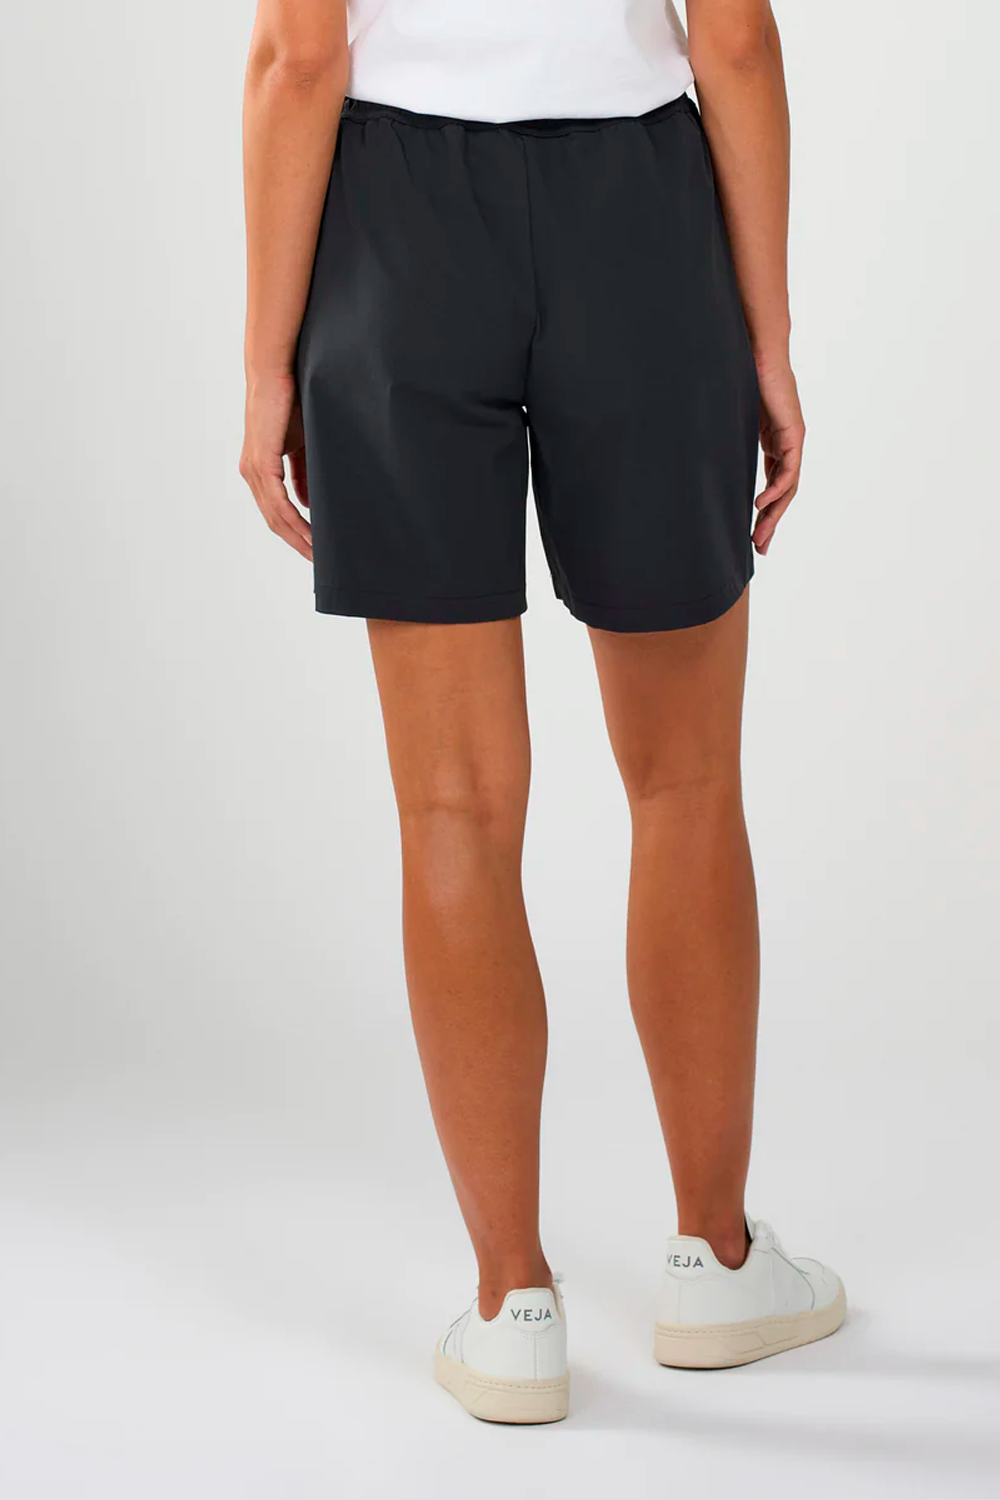 Stretch ribstrop elastic waist shorts, Black Jet